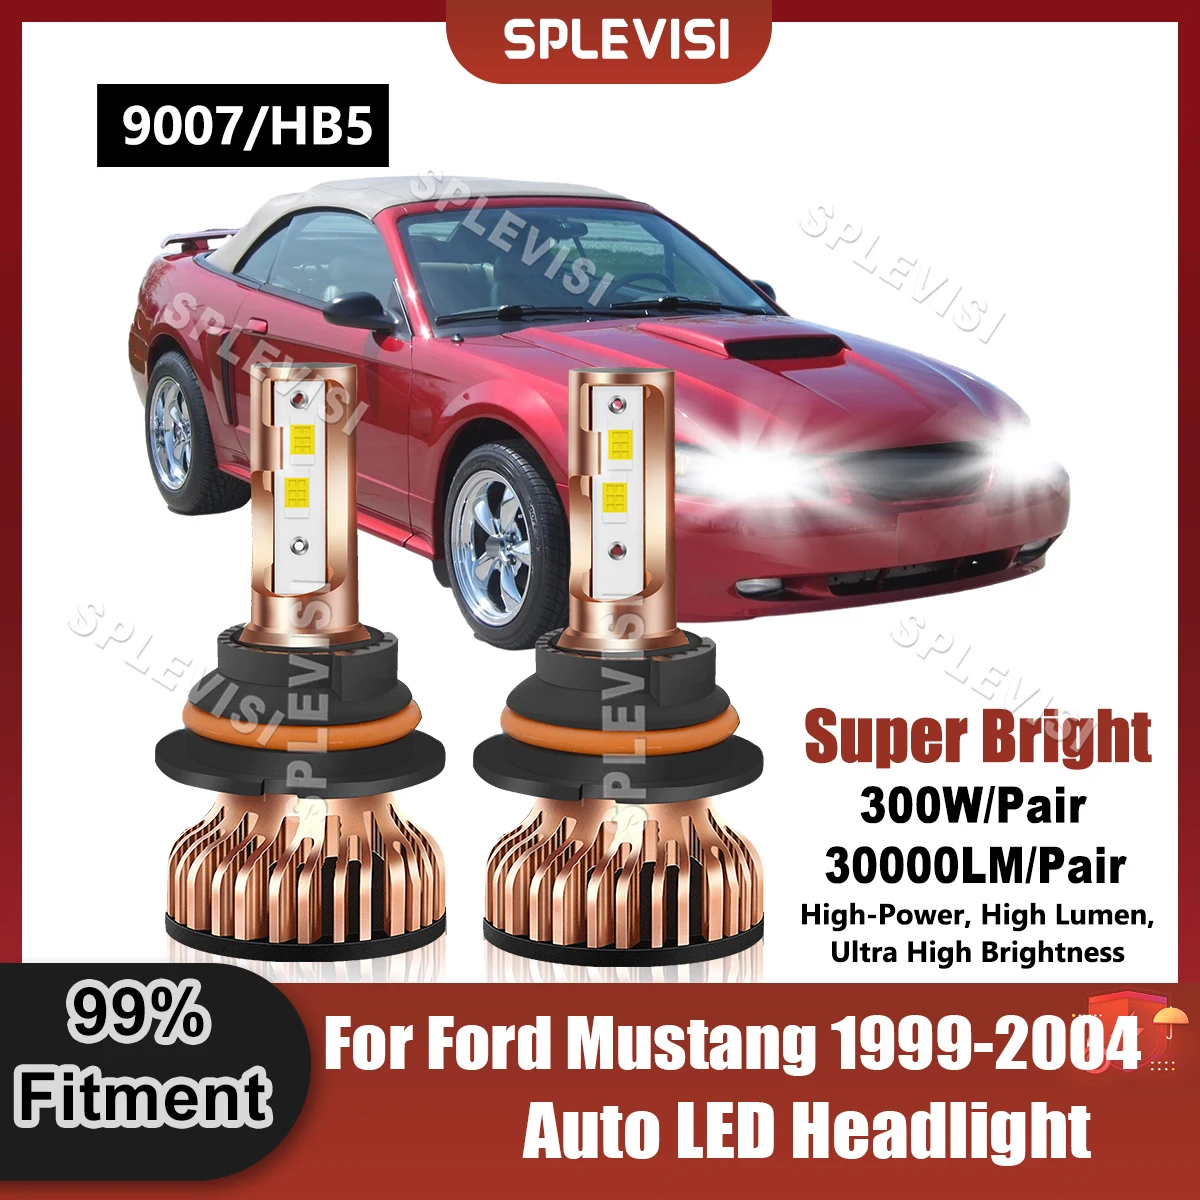 

2PCS 9007/HB5 LED Headlight High Low Beam Bulbs 9V-24V 300W 30000LM For Ford Mustang 1999 2000 2001 2002 2003 2004